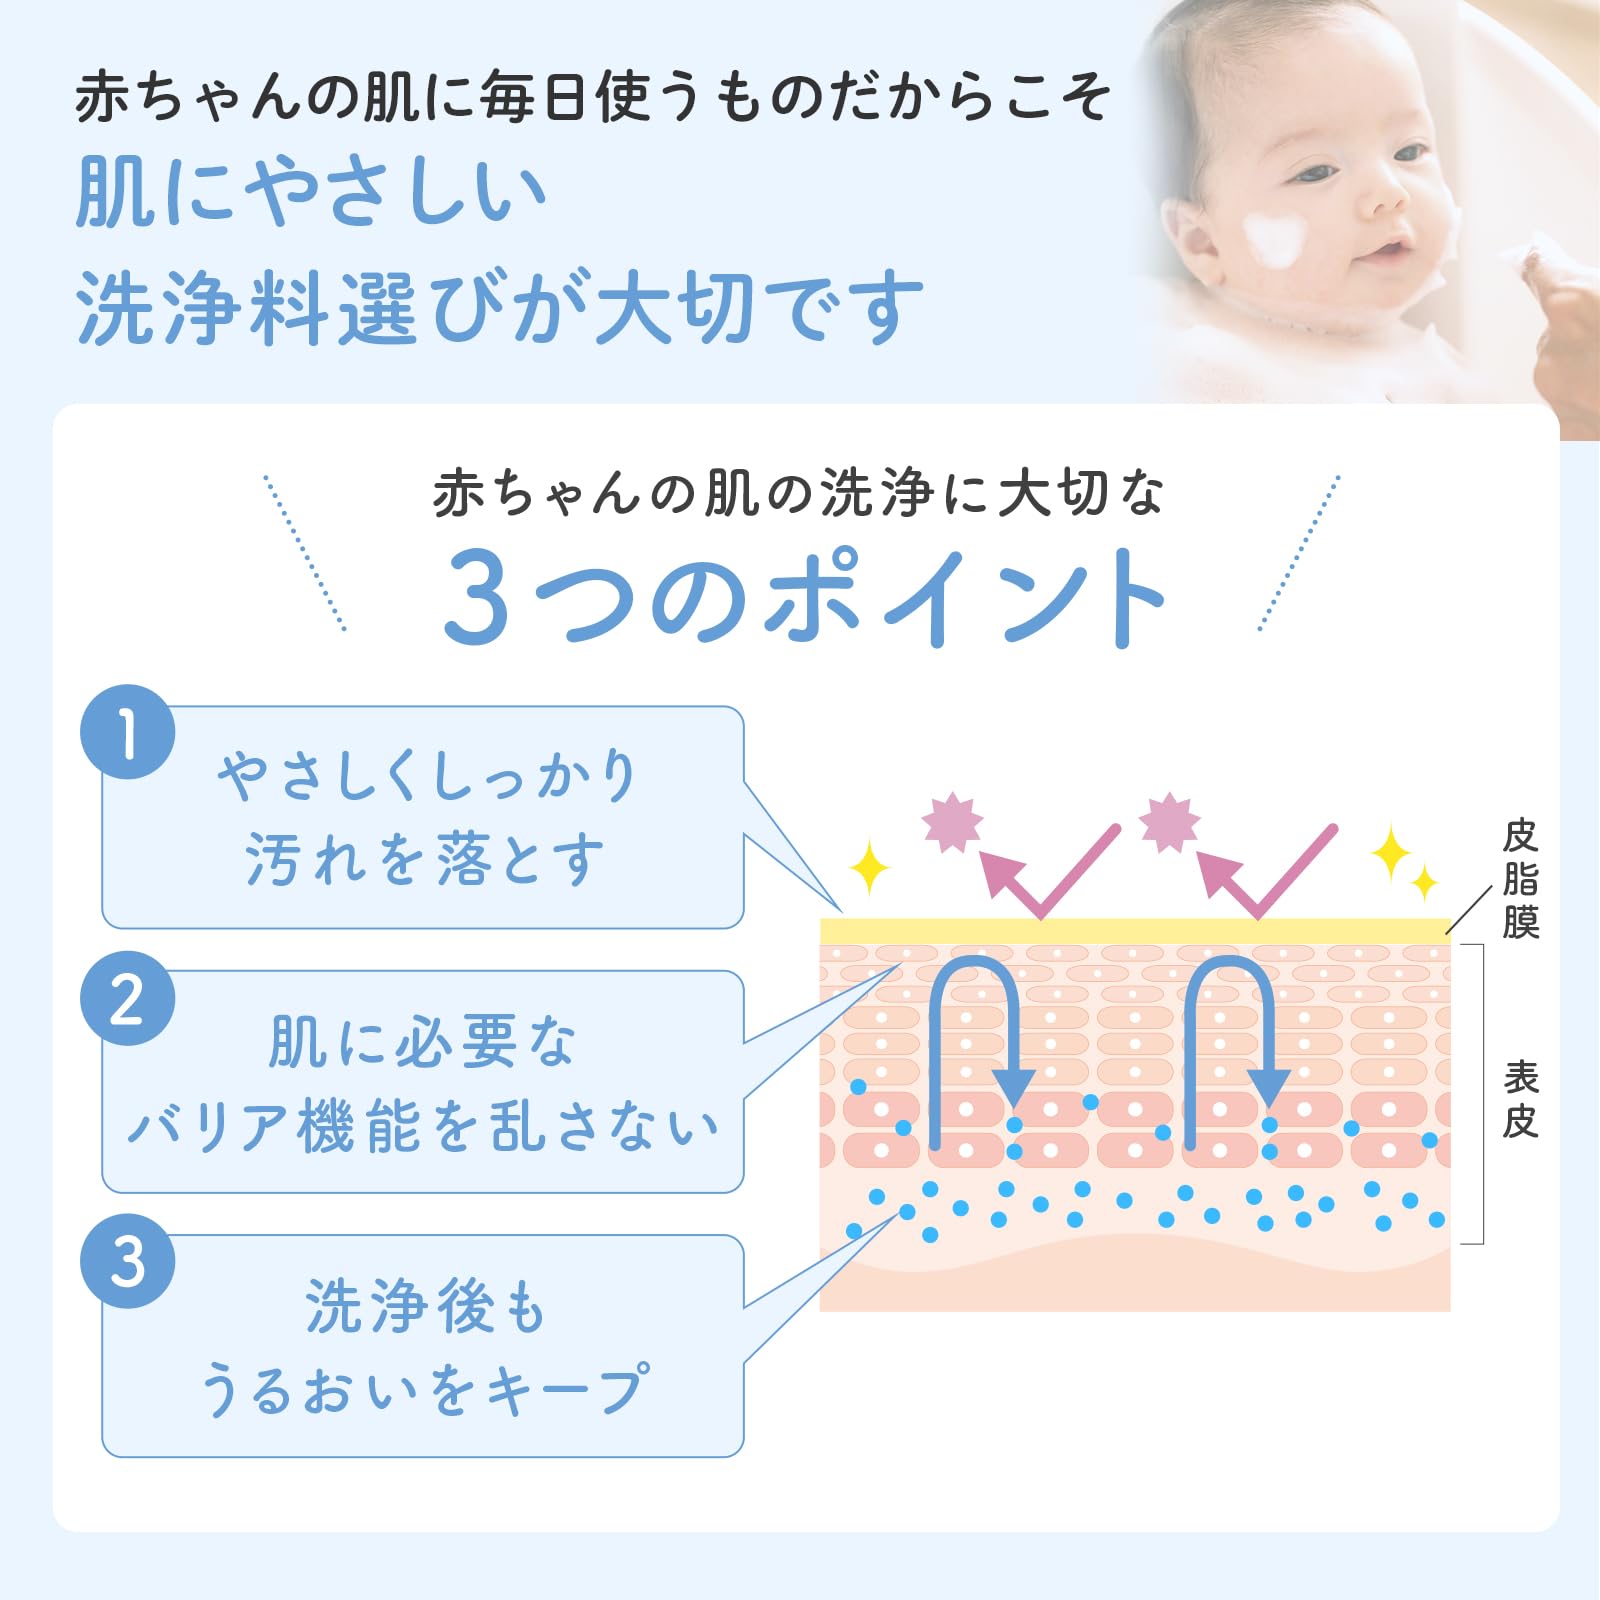 Mama & Kids Baby Full Body Shampoo, 16.2 fl oz (460 ml), Hypoallergenic Skin Care, Whole Body Soap, Additive-Free, Newborn, Foam Type